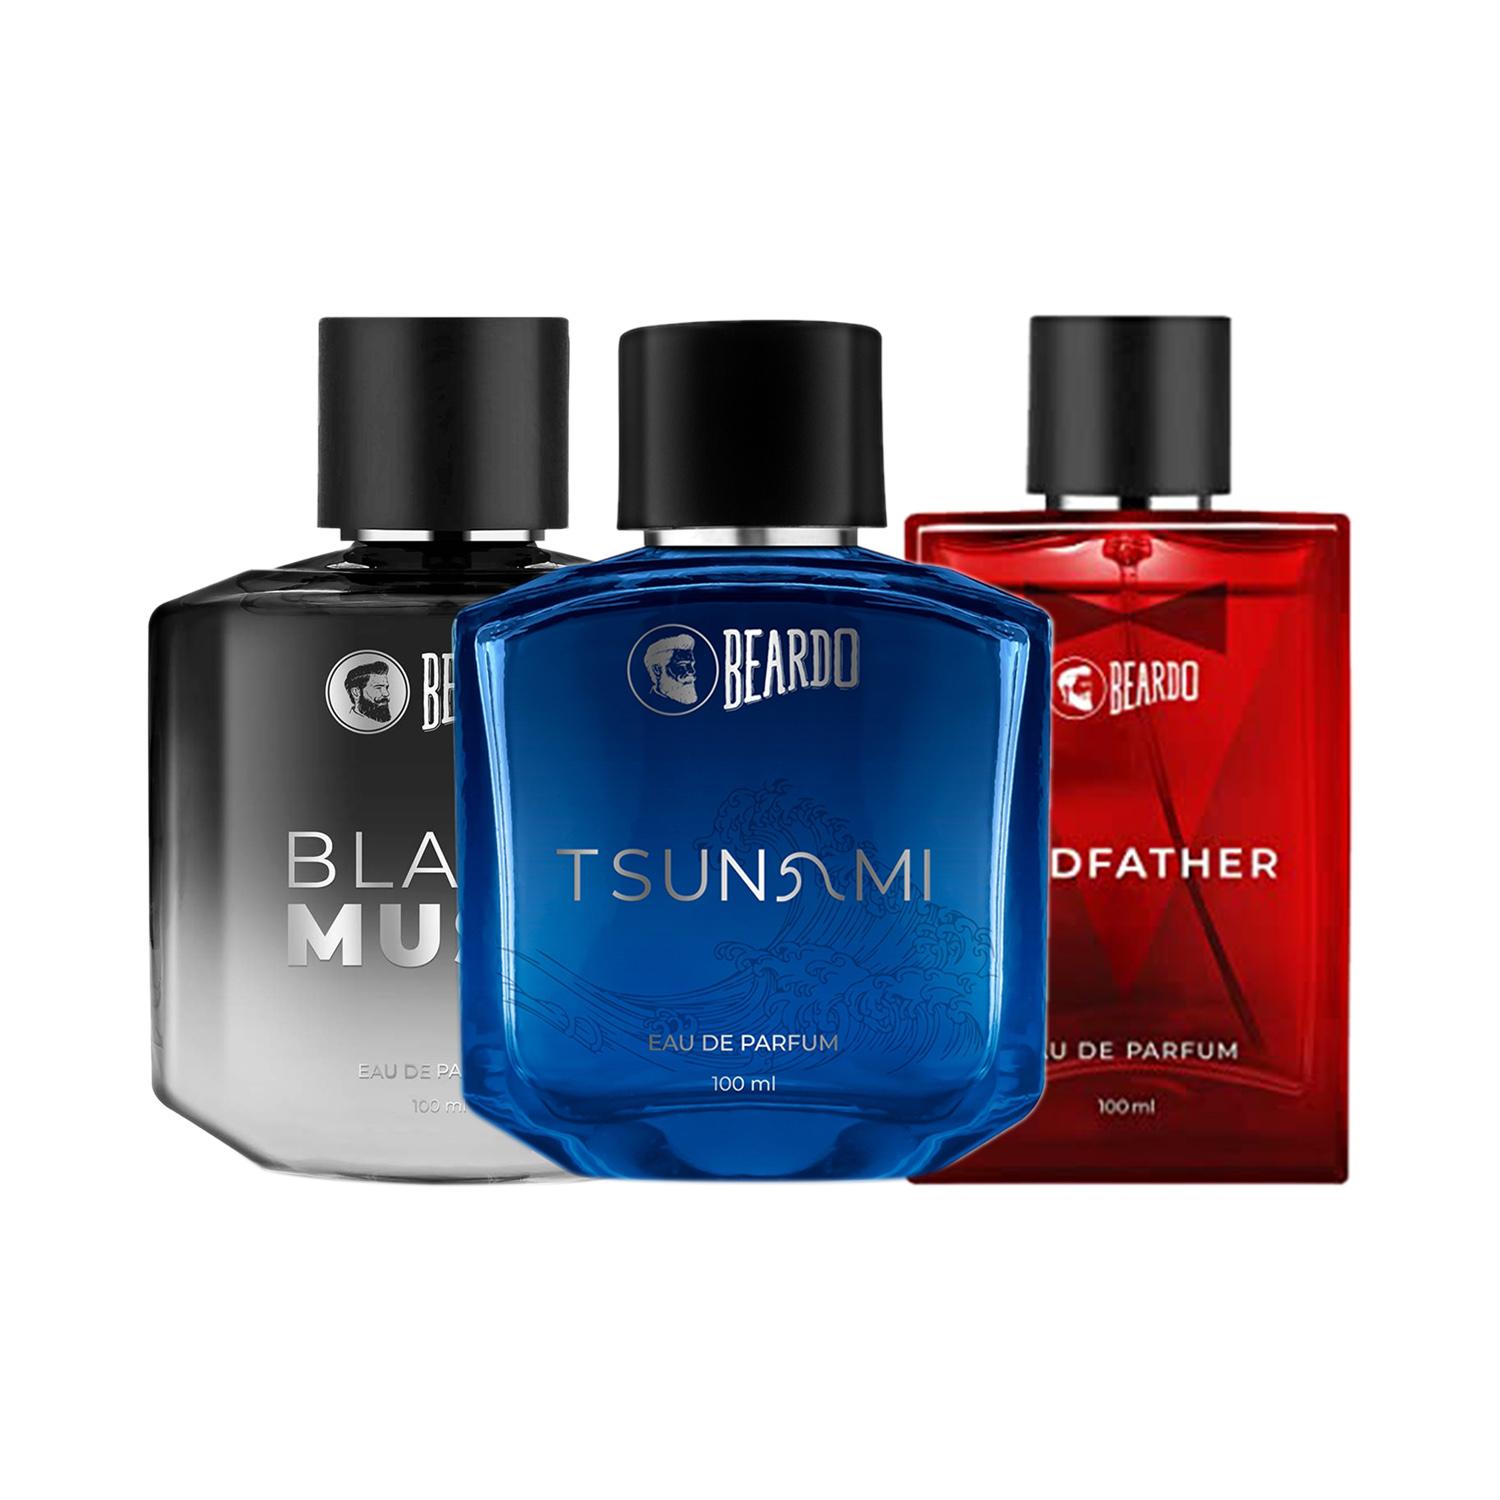 Beardo | Beardo GodFather Perfume, Black Musk Perfume, Tsunami Perfume EDP (Set of 3) Combo